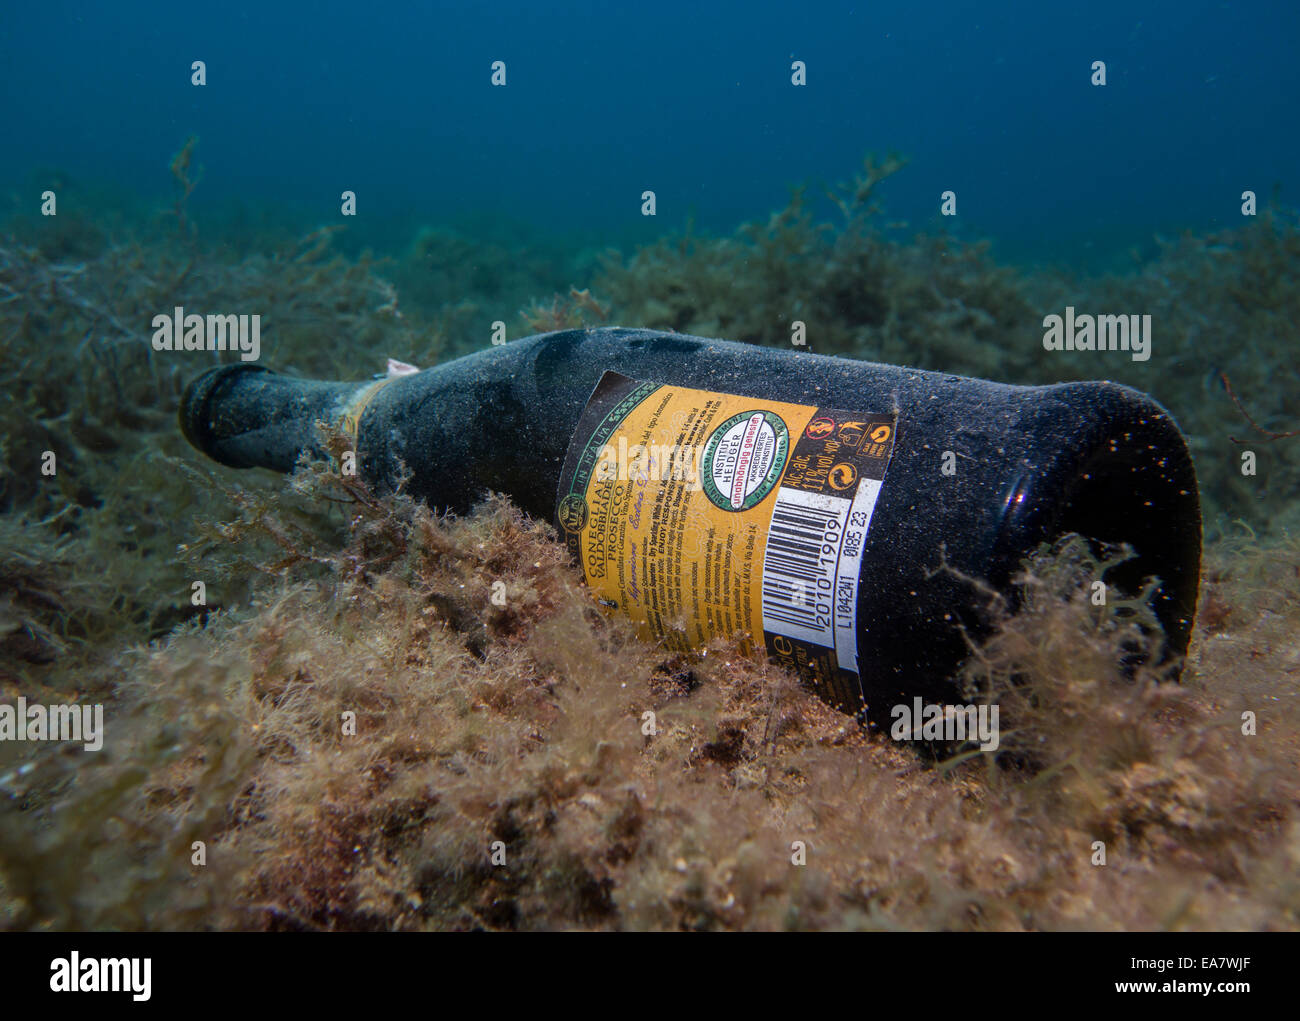 Sunken bottle under water. Stock Photo